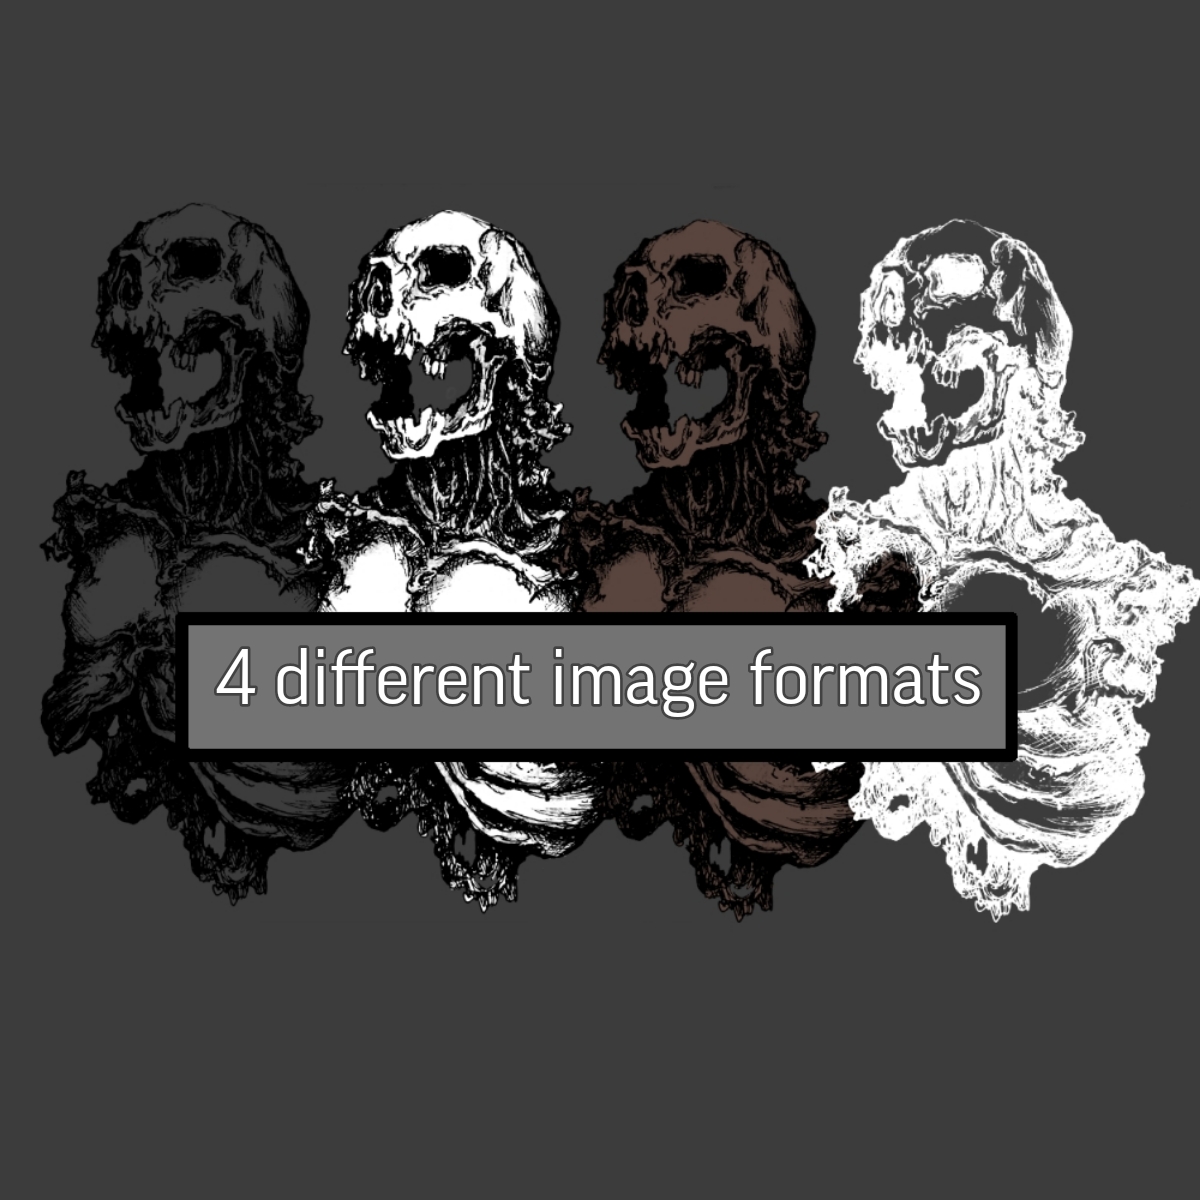 Skull Creature. Dark Style Image cover image.